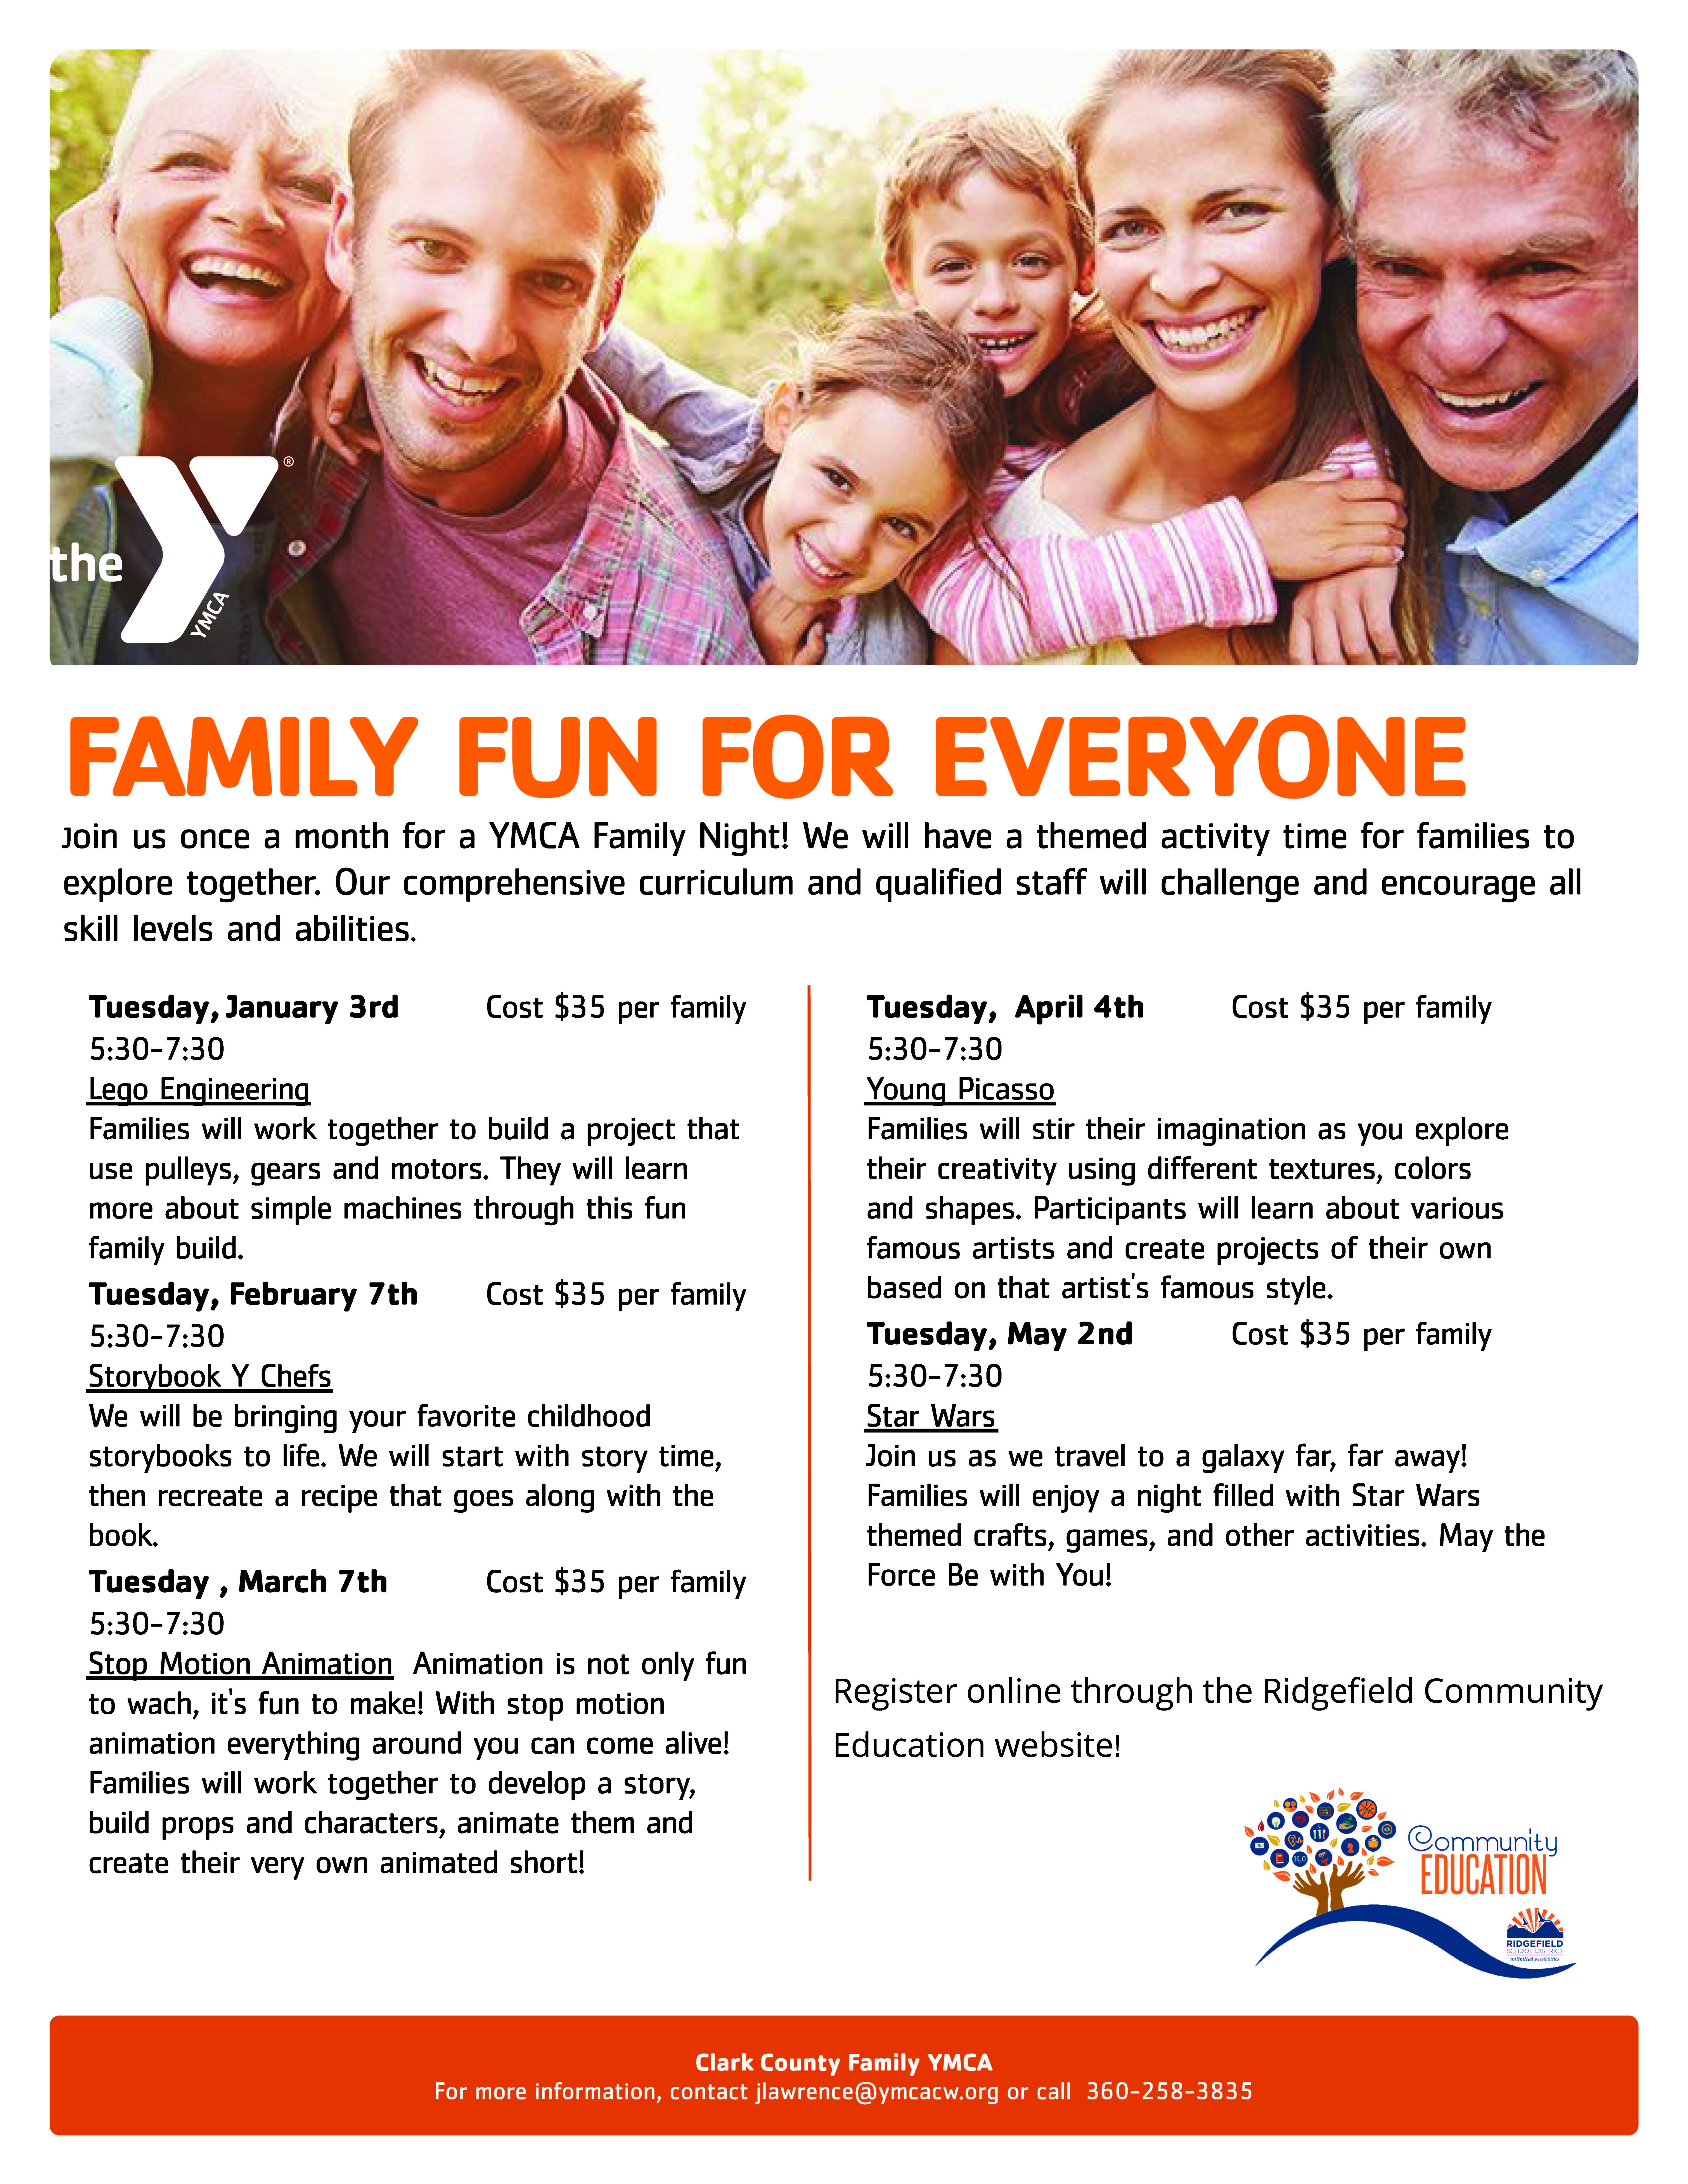 YMCA Family Fun Flyer